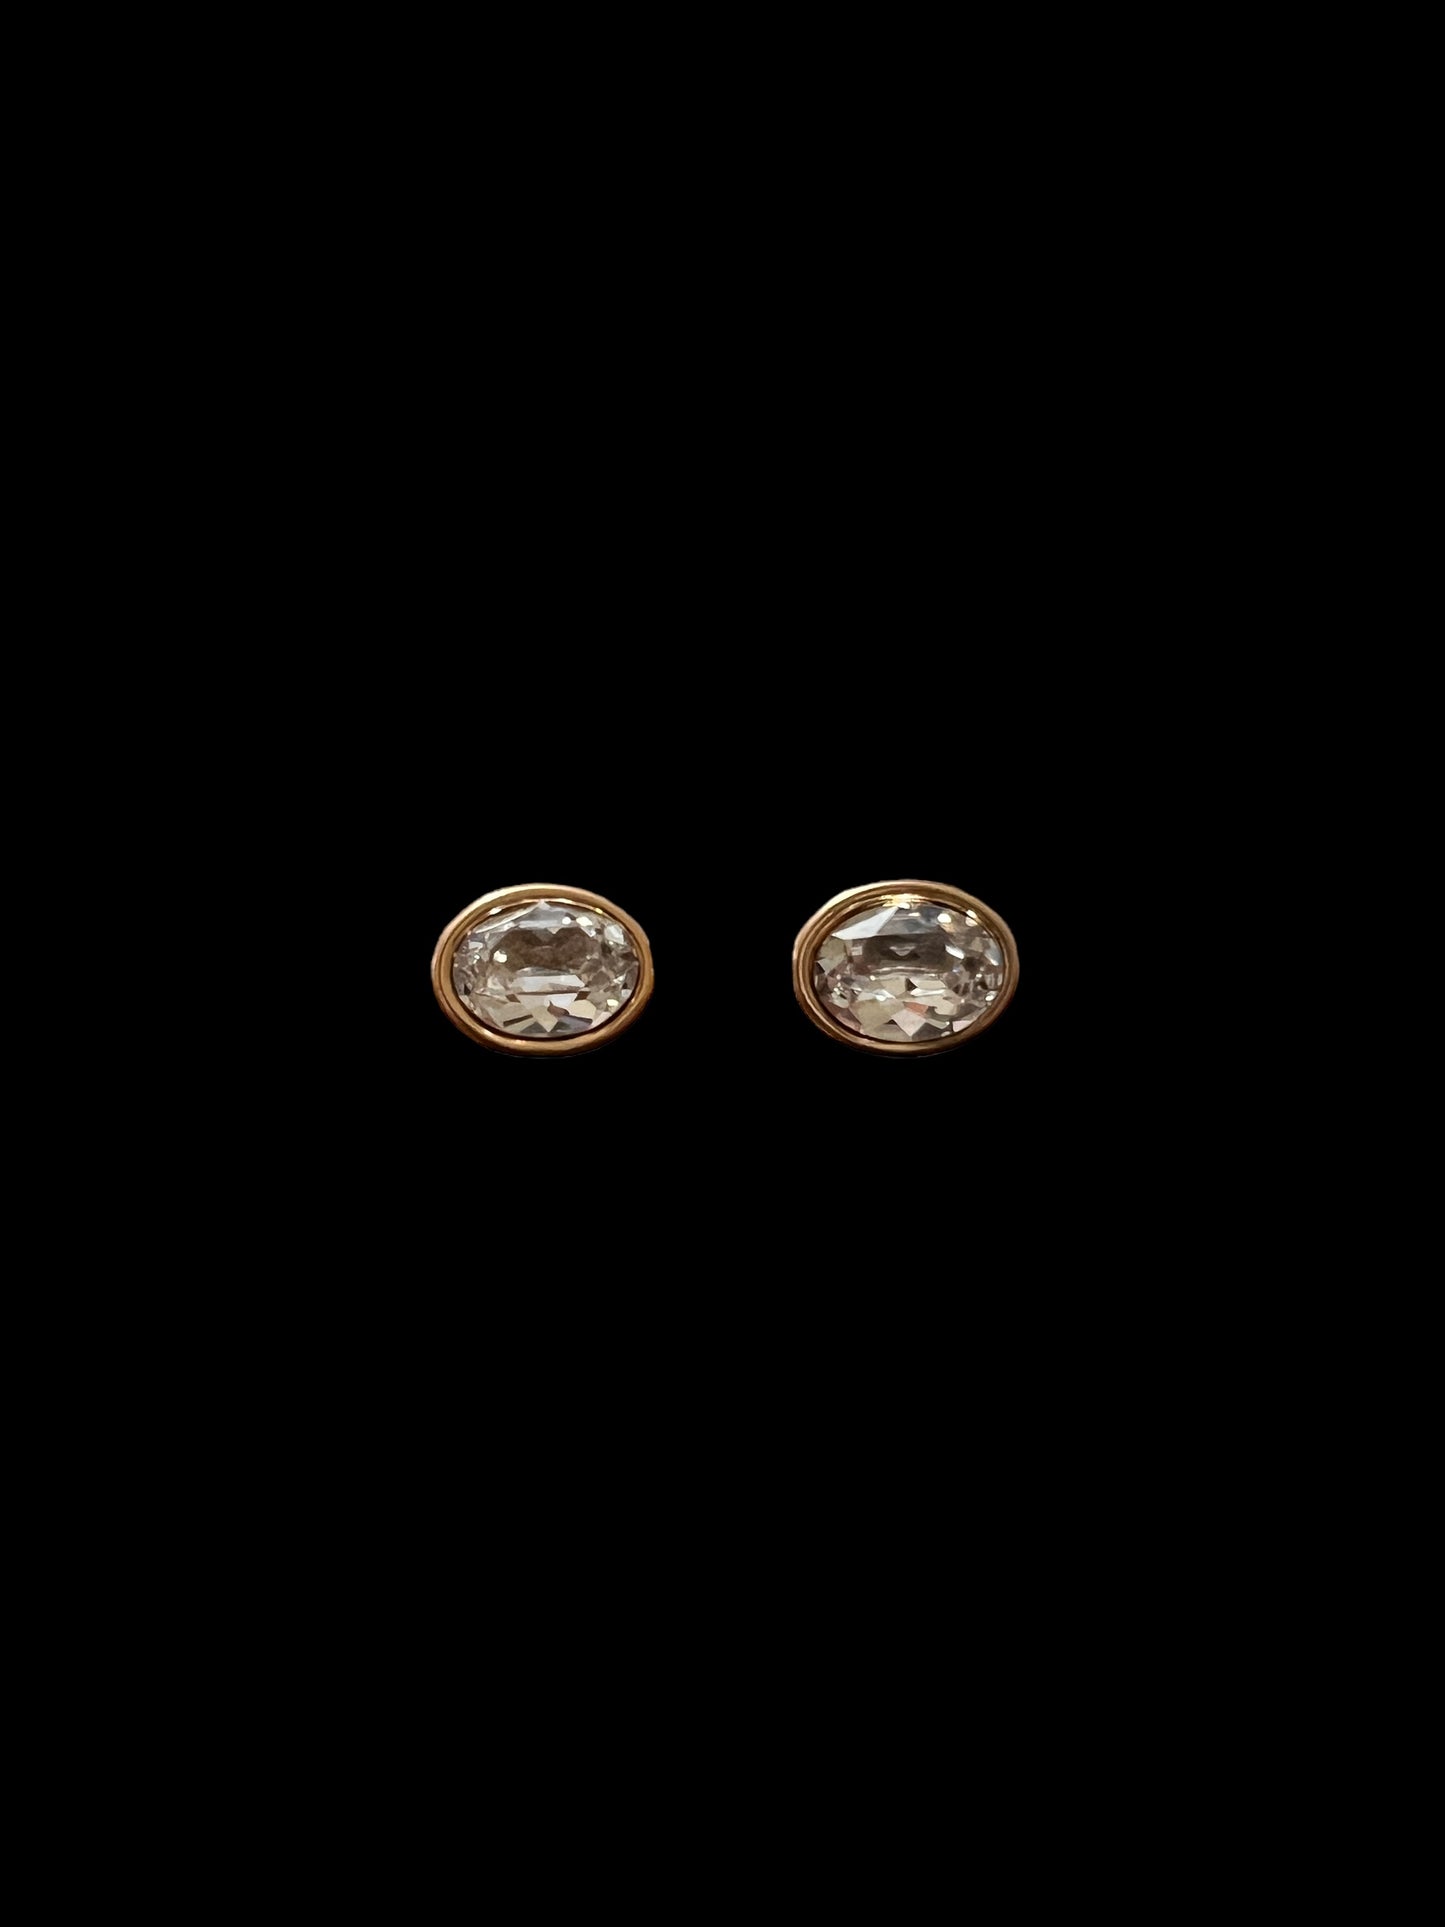 where to buy cute earrings canada
Oval crystal gold studs earrings 